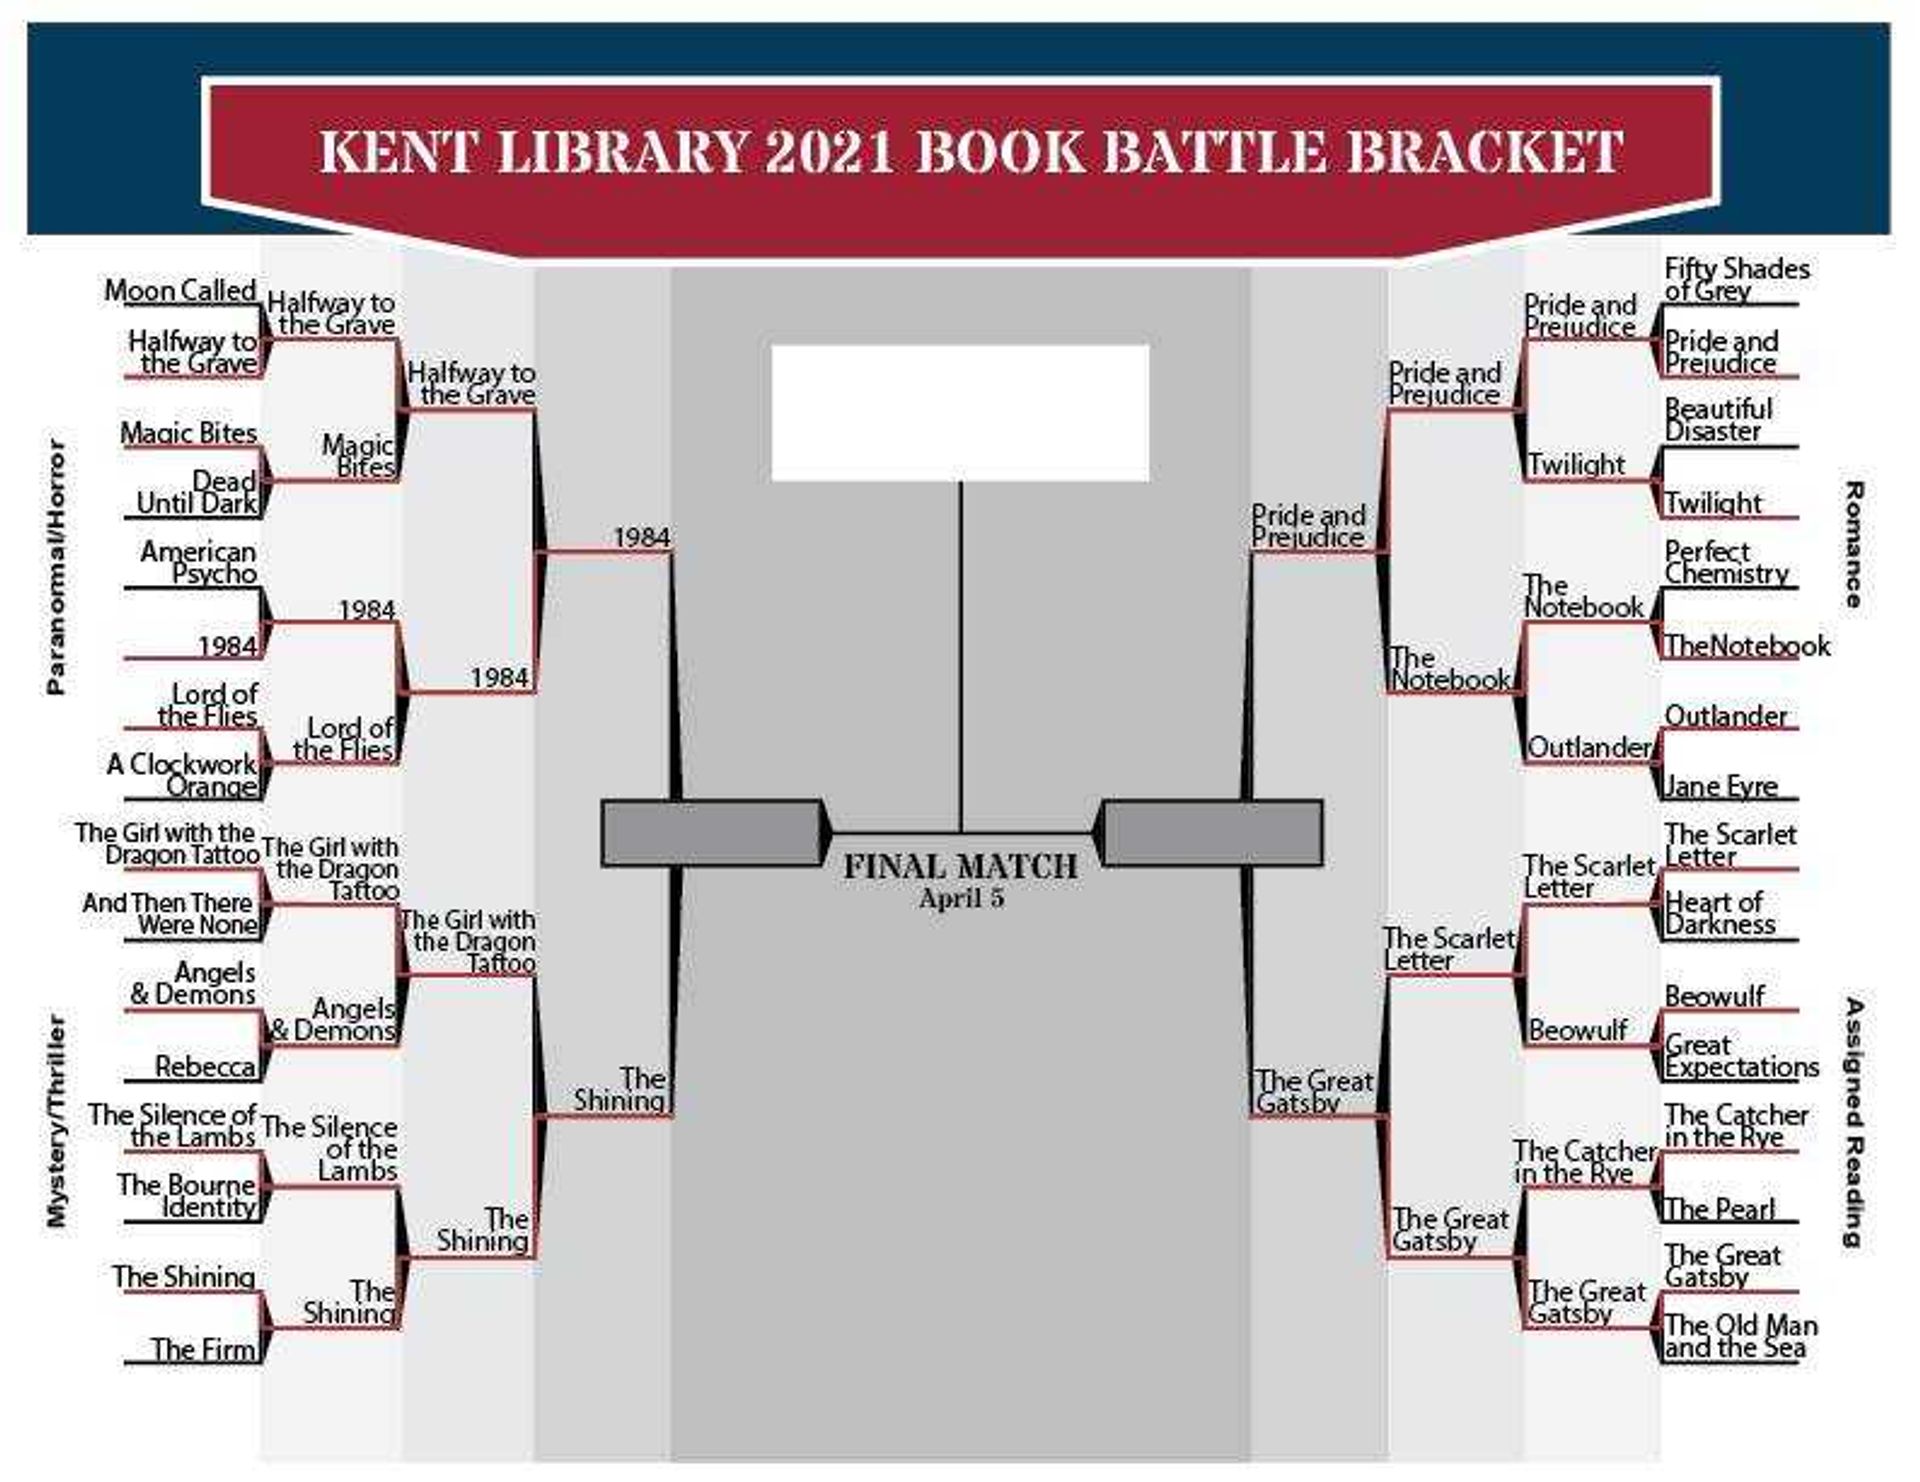 Kent Library’s 2021 Book Battle Bracket.